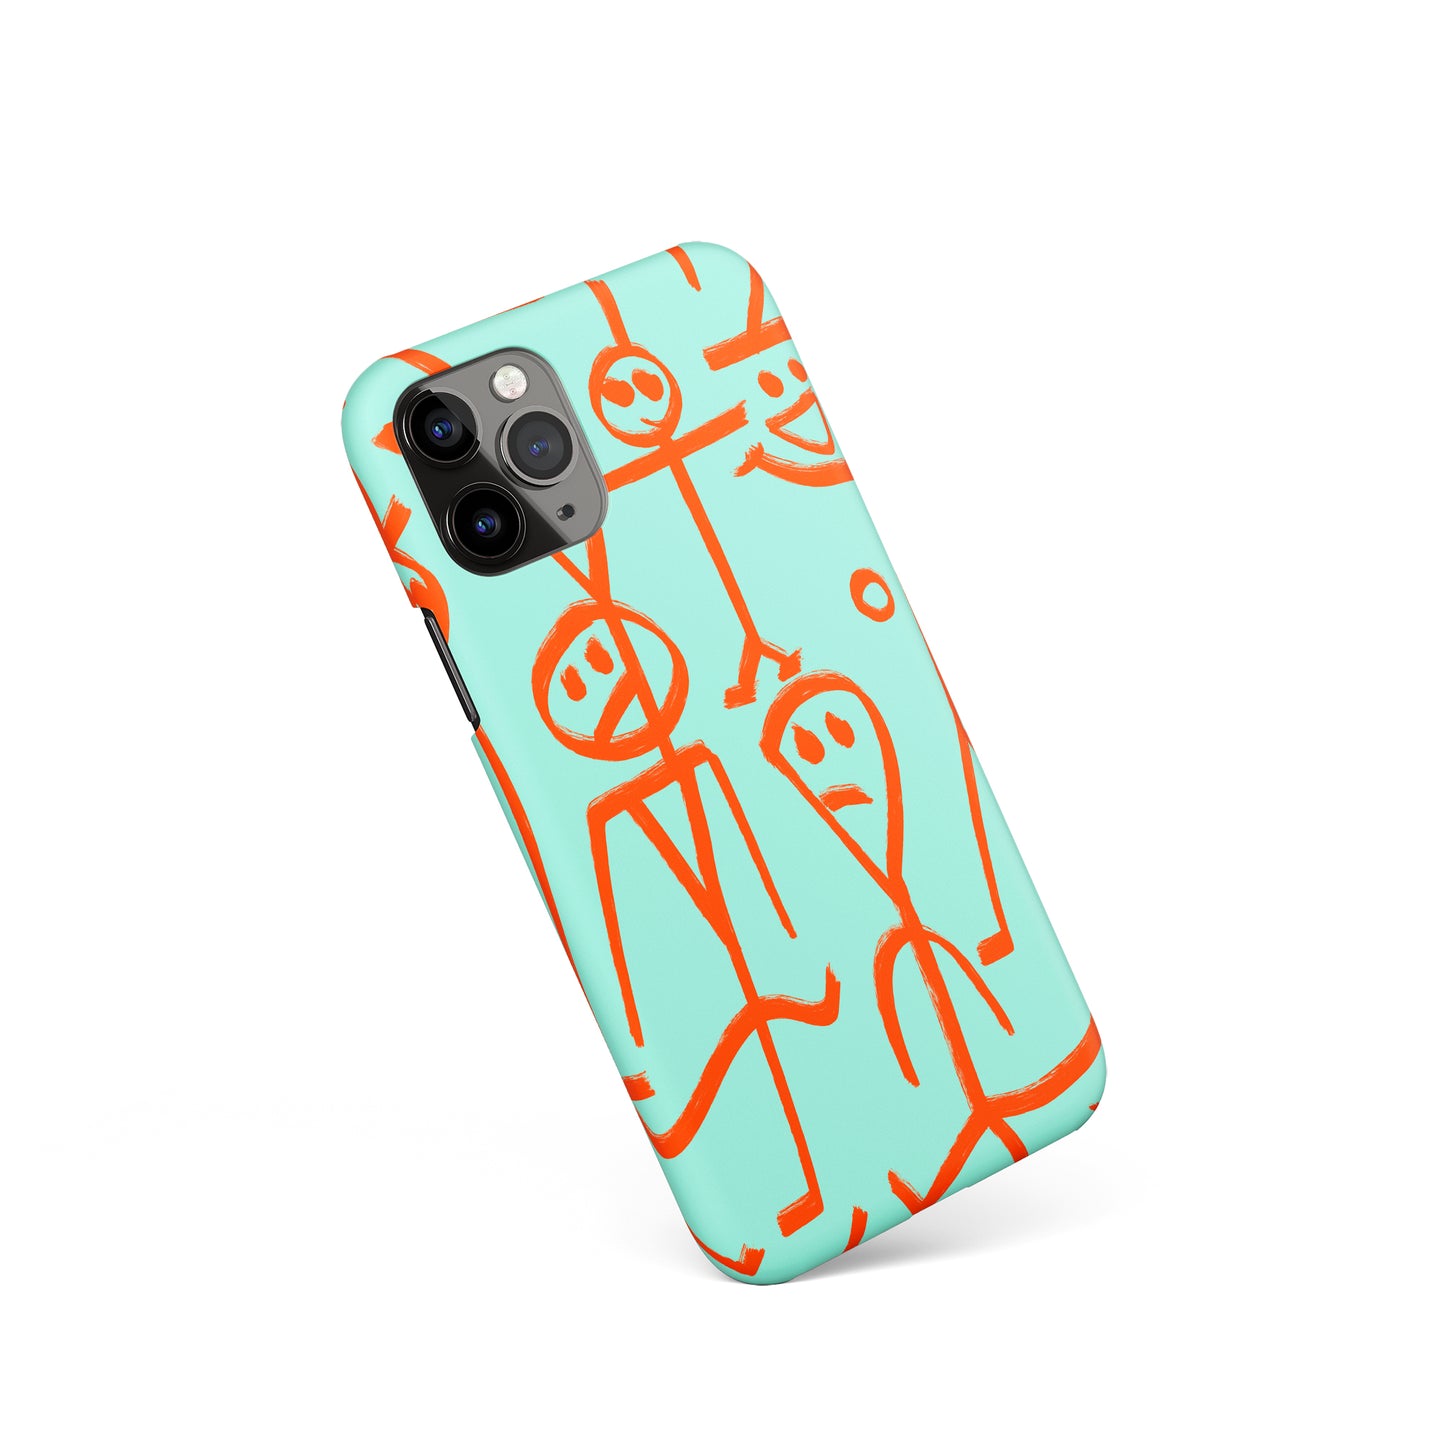 Paul Klee Drawing iPhone Case